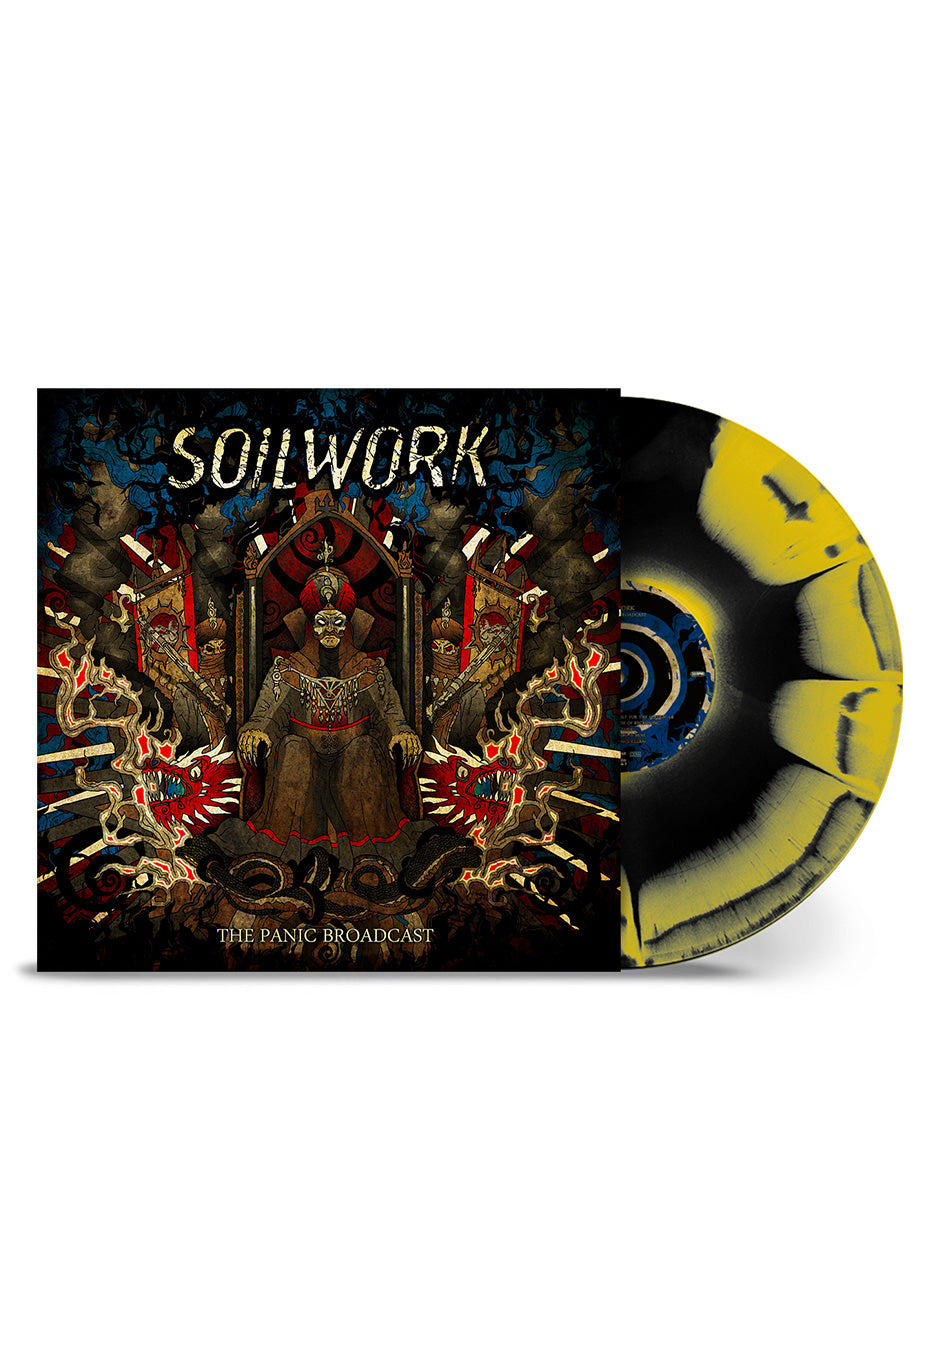 Soilwork - The Panic Broadcast Ltd. Yellow/Black Sunburst - Colored Vinyl